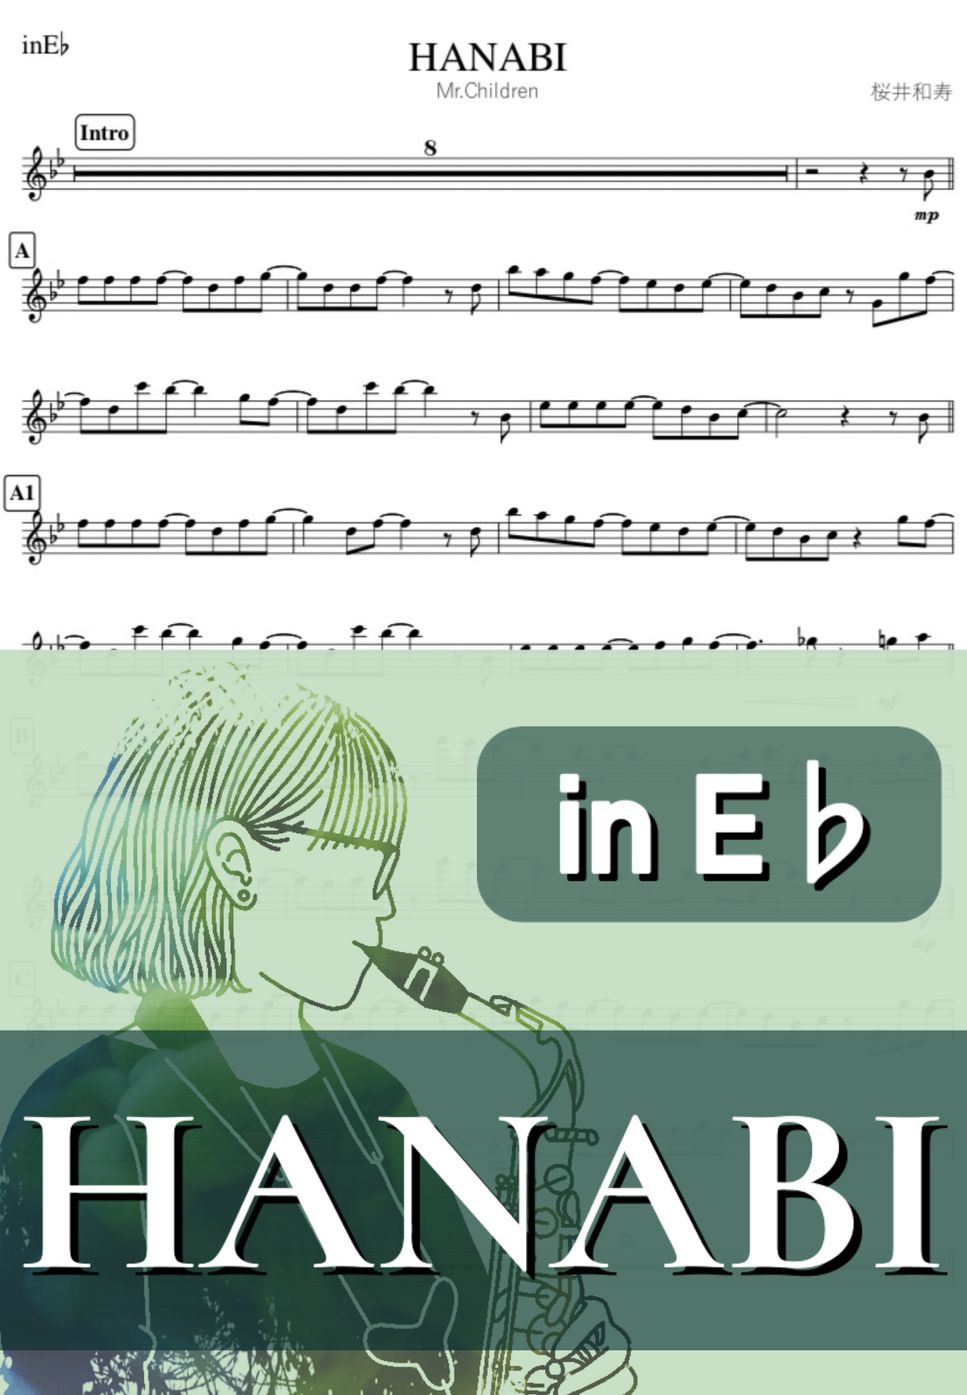 Mr.Children - HANABI (E♭) by kanamusic